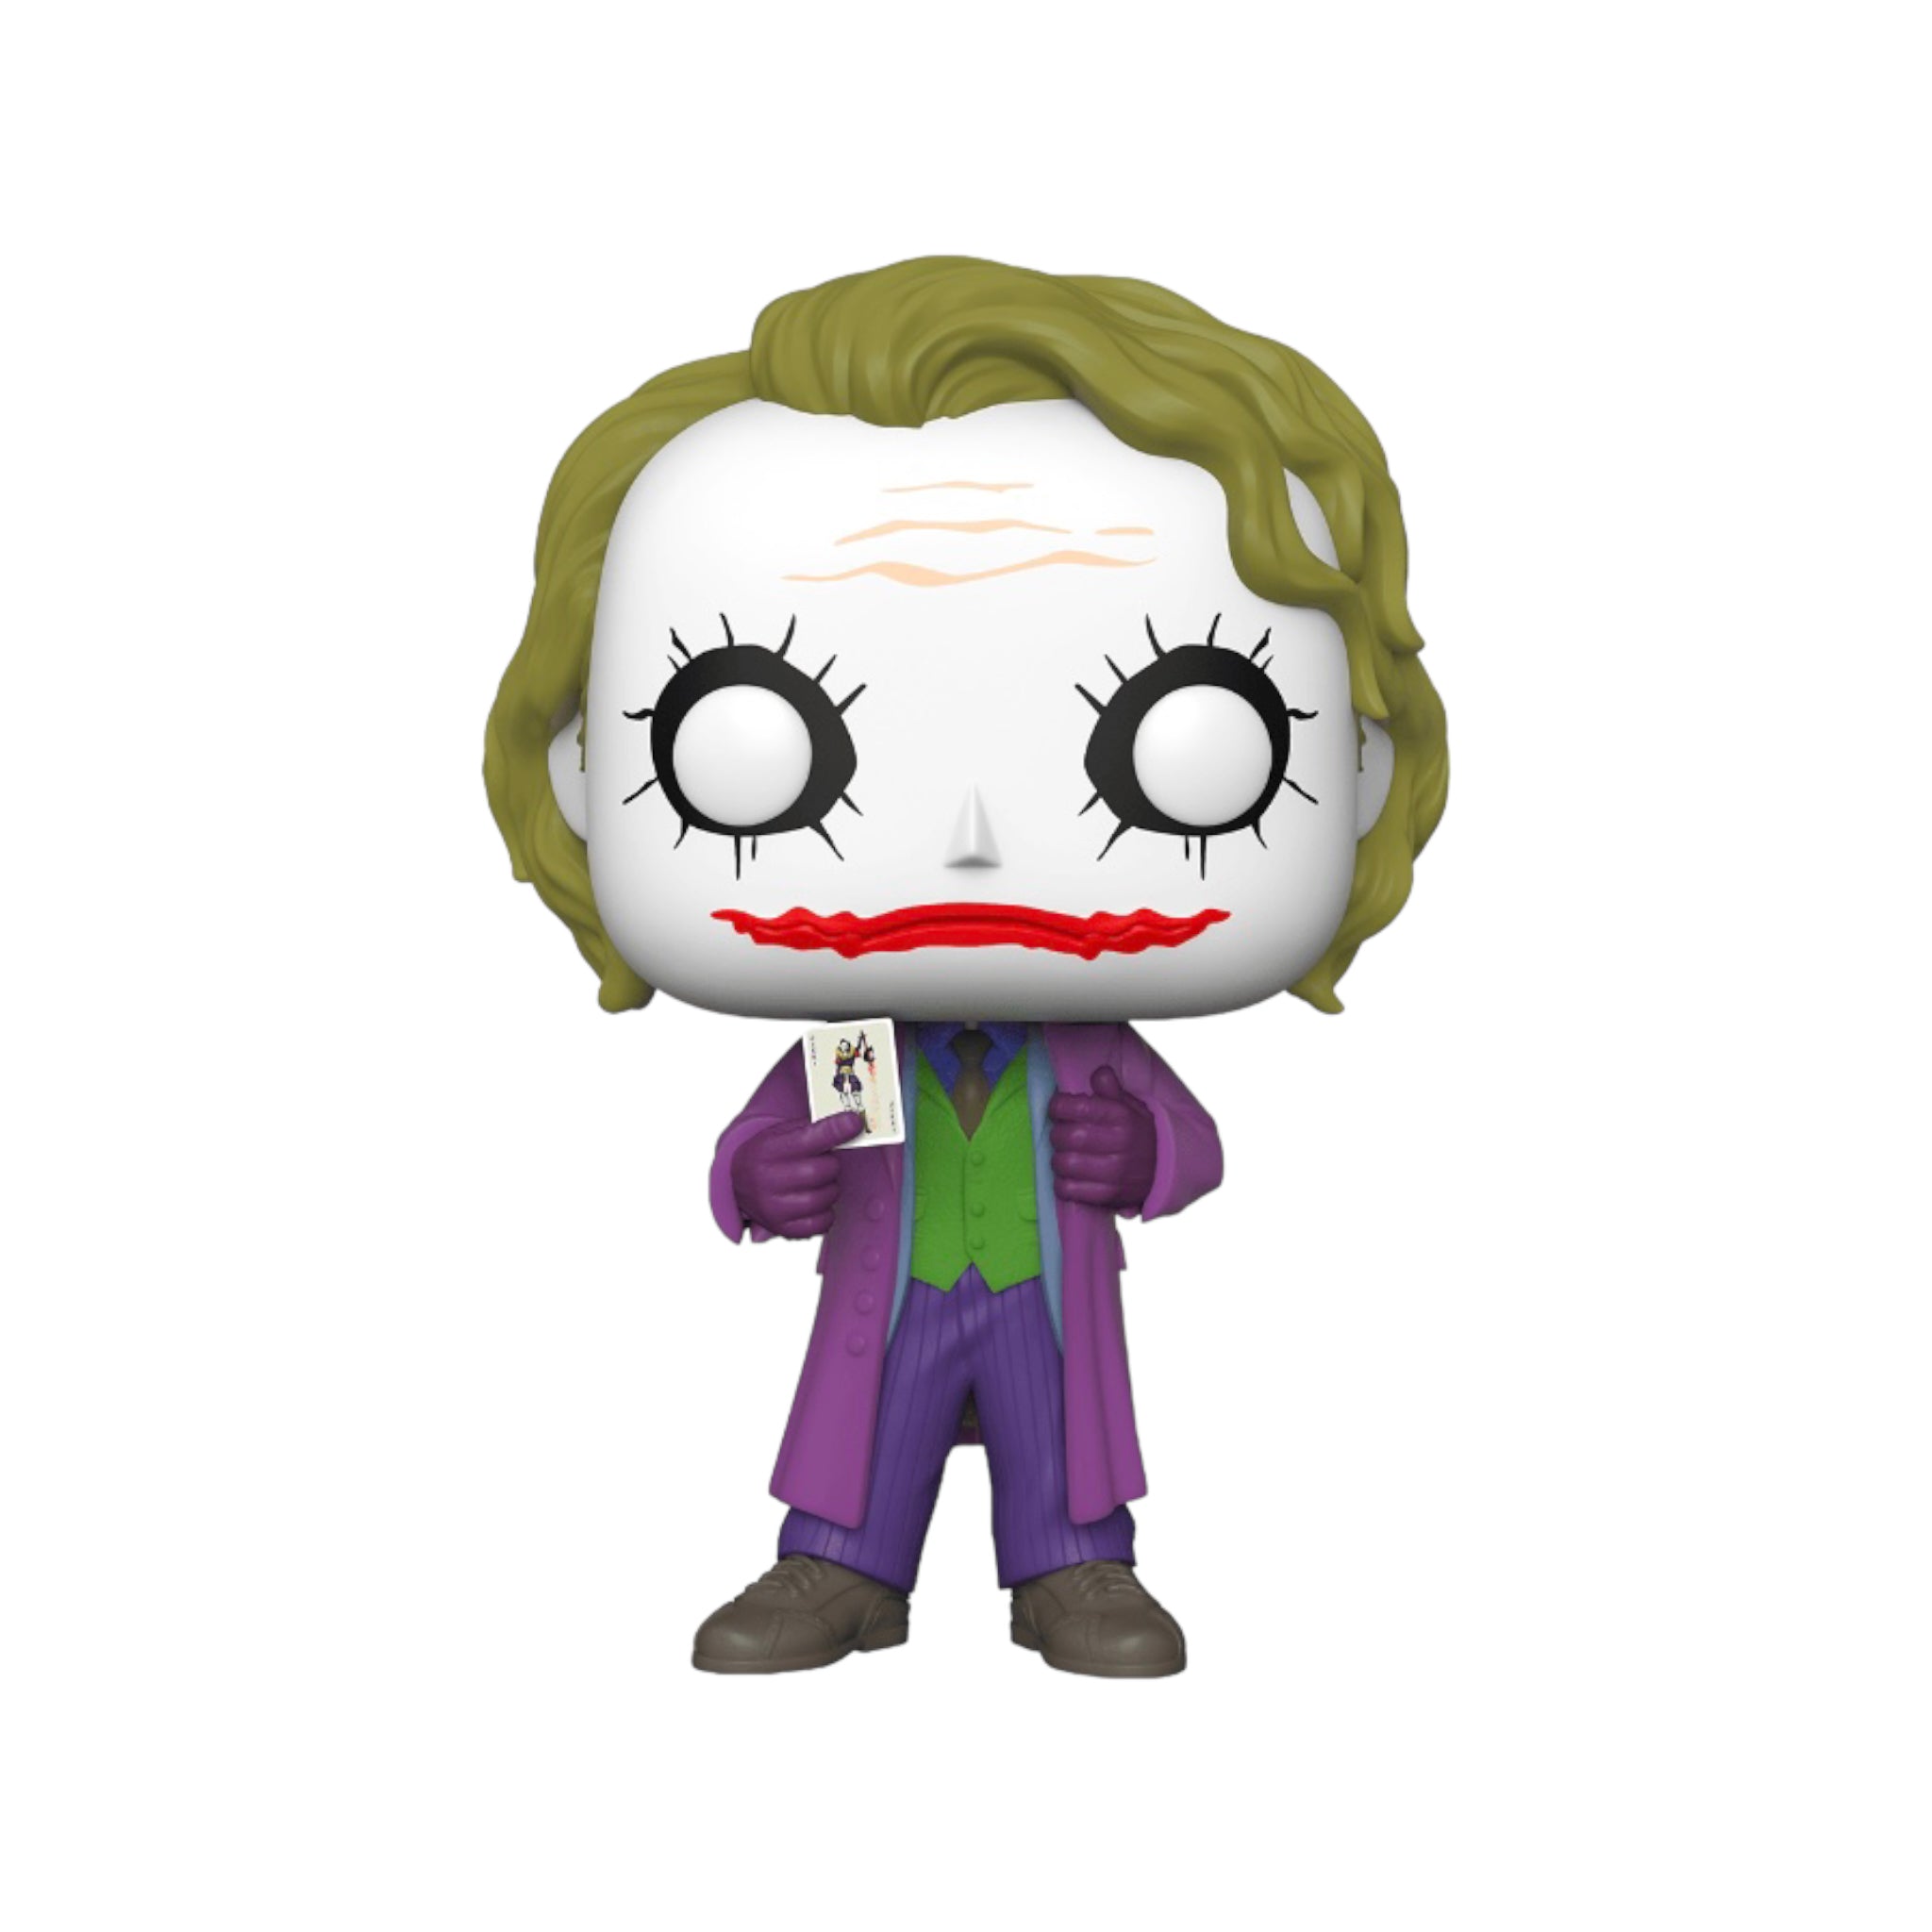 The Joker #334 10" Funko Pop! - The Dark Knight - Condition 8.5/10